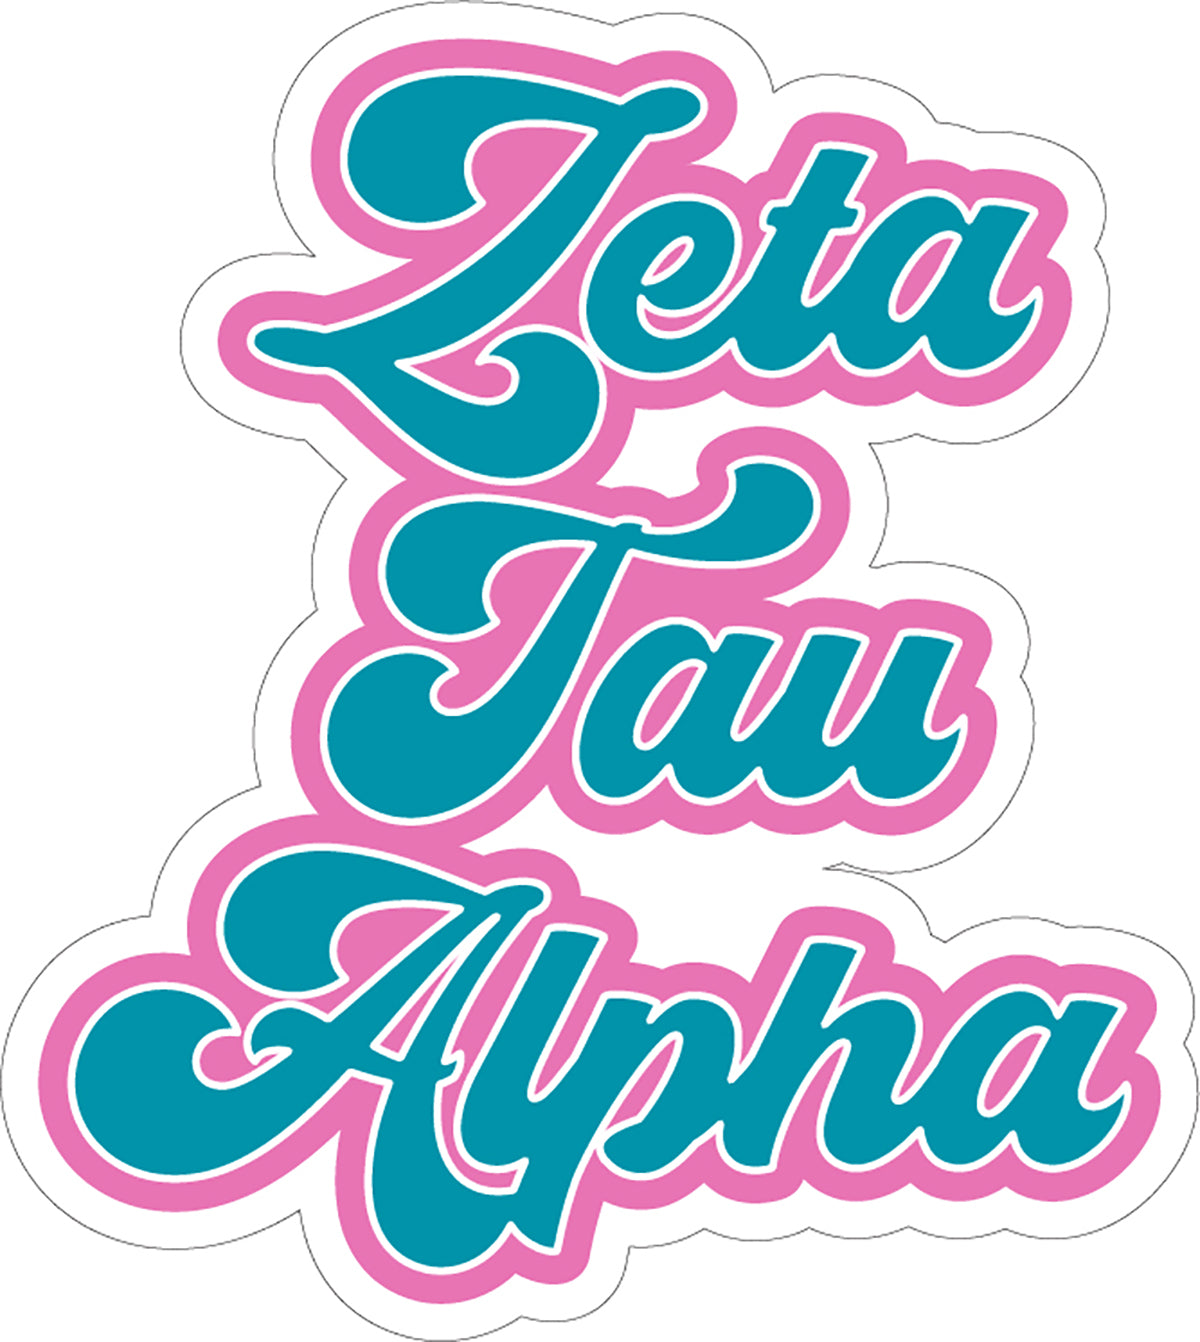 Sorority Shop Zeta Tau Alpha - Koala Pouch - Logo Design, Adhesive Cell  Phone Wallet